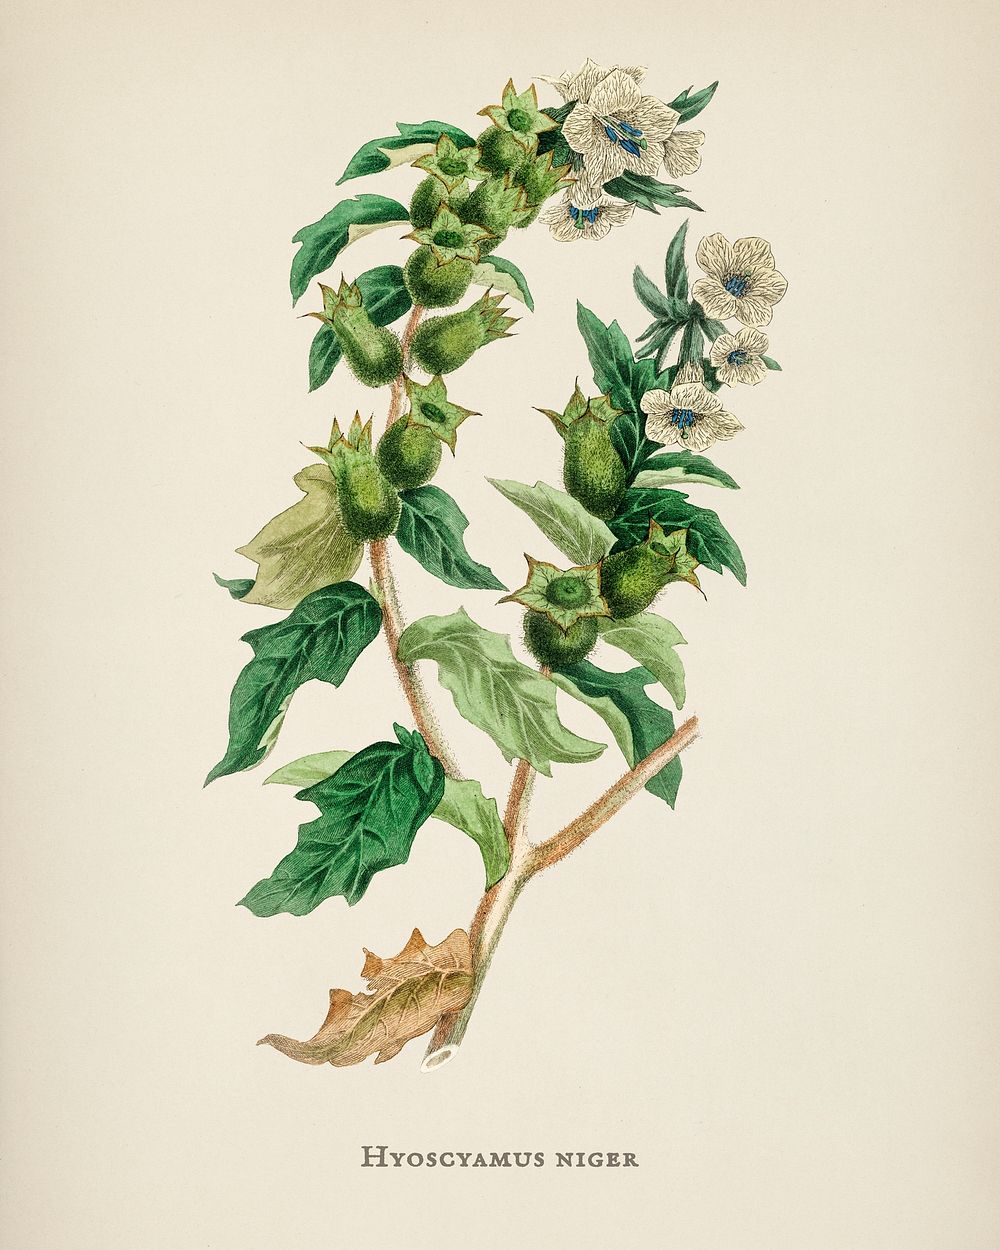 Henbane (Hyoscyamus niger) illustration from Medical Botany (1836) by John Stephenson and James Morss Churchill.